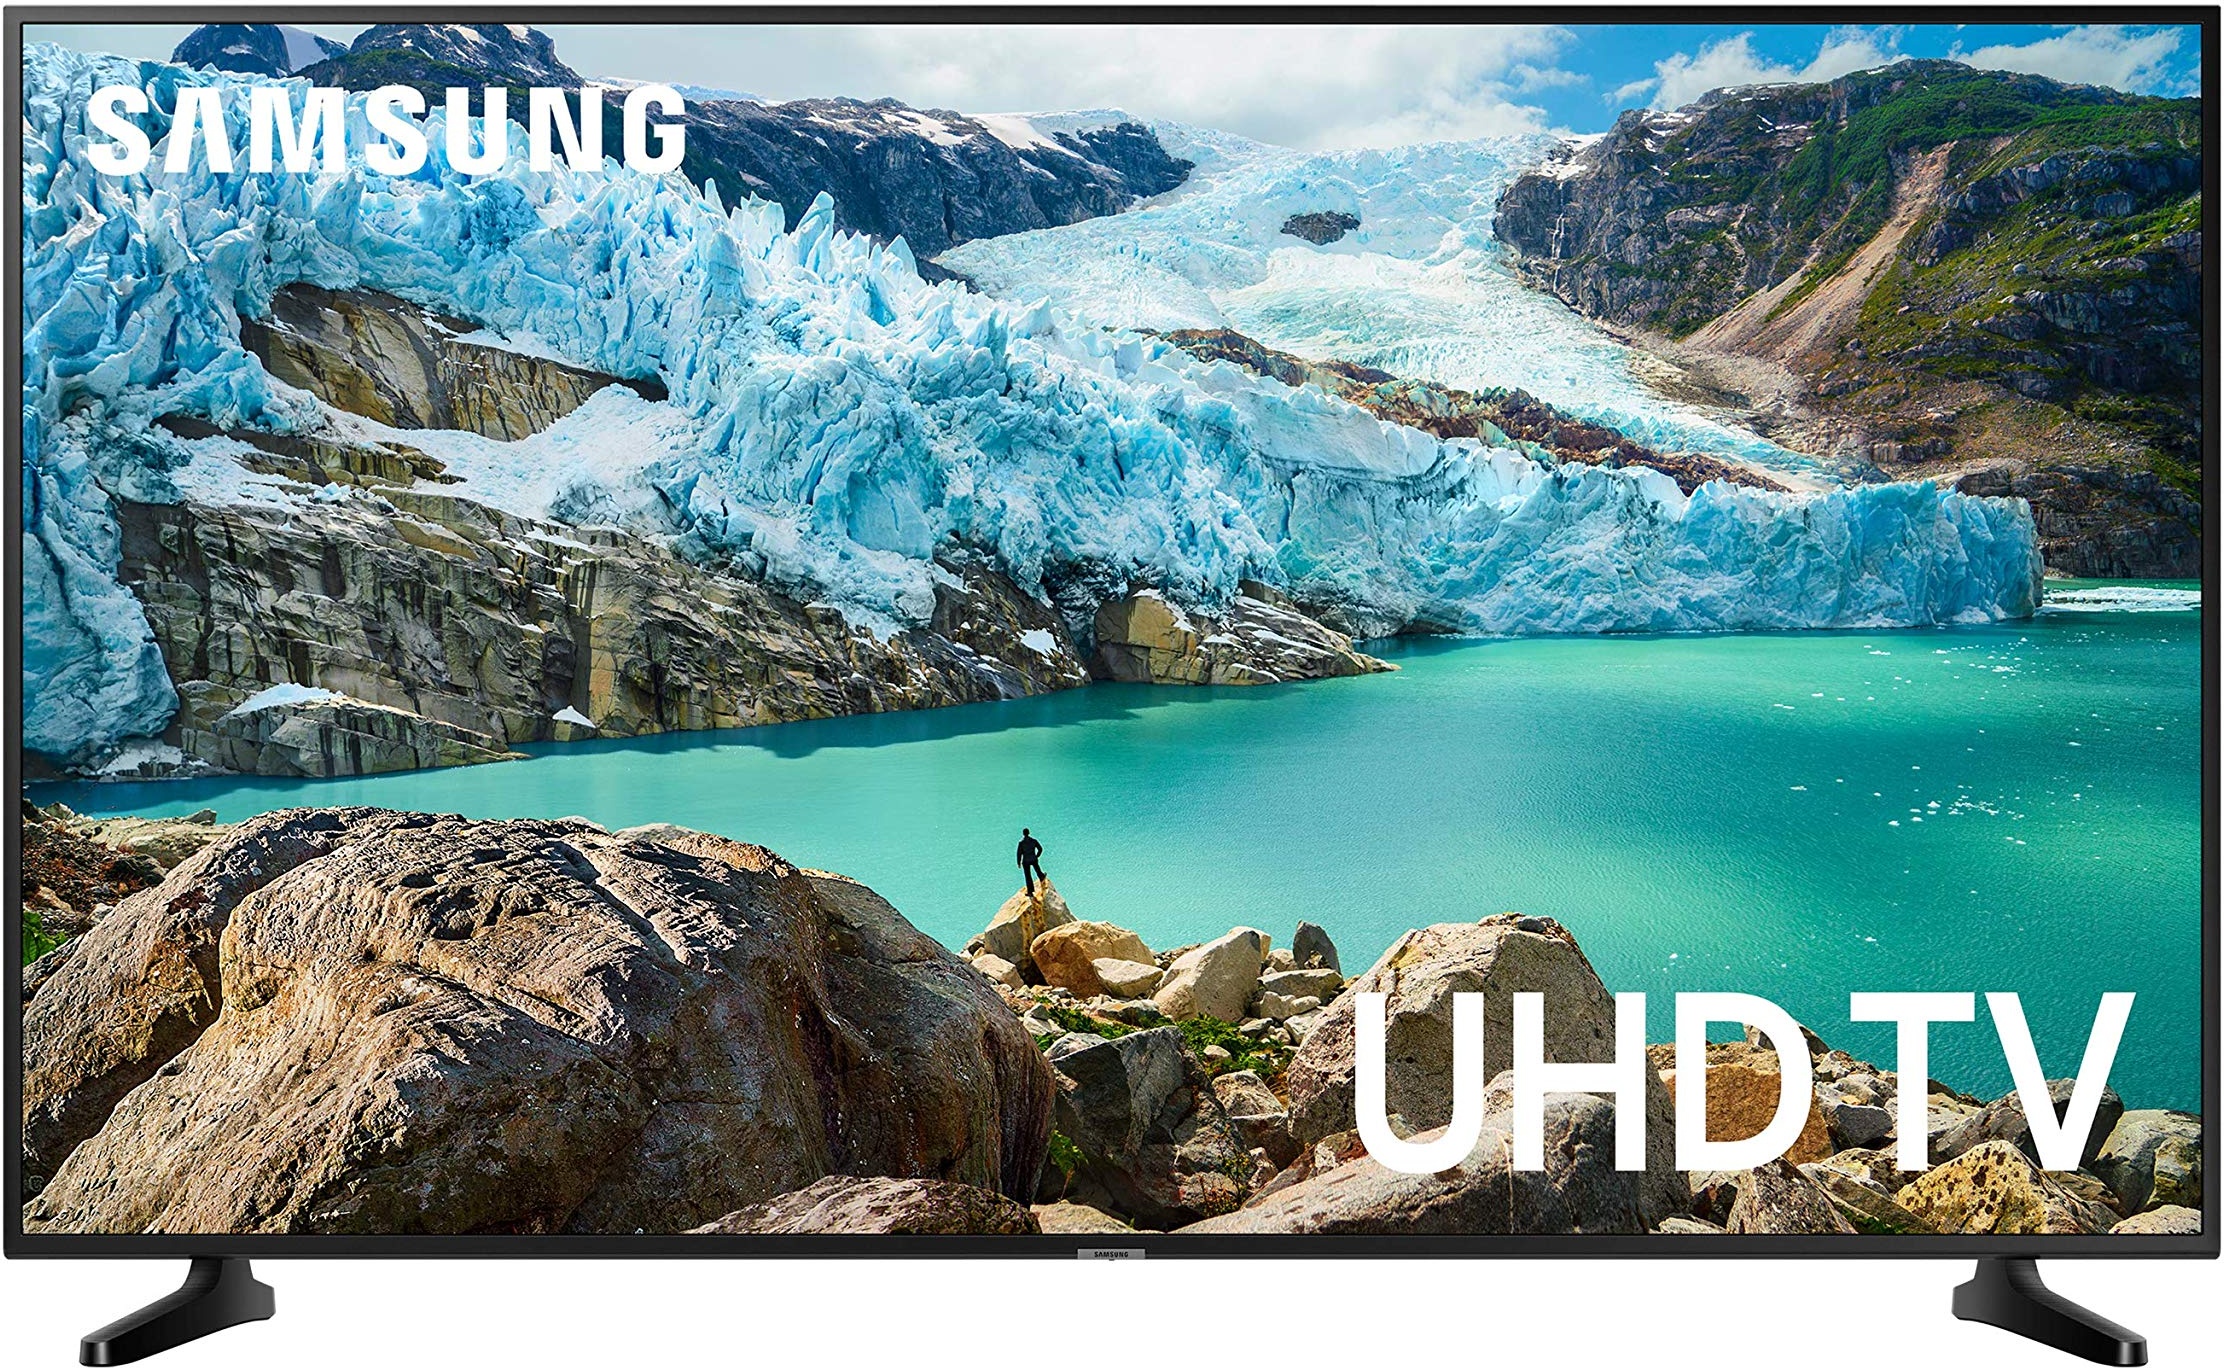 Samsung RU7099 138 cm (55 Zoll) LED Fernseher (Ultra HD, HDR, Triple Tuner, Smart TV) [Modelljahr 2019]